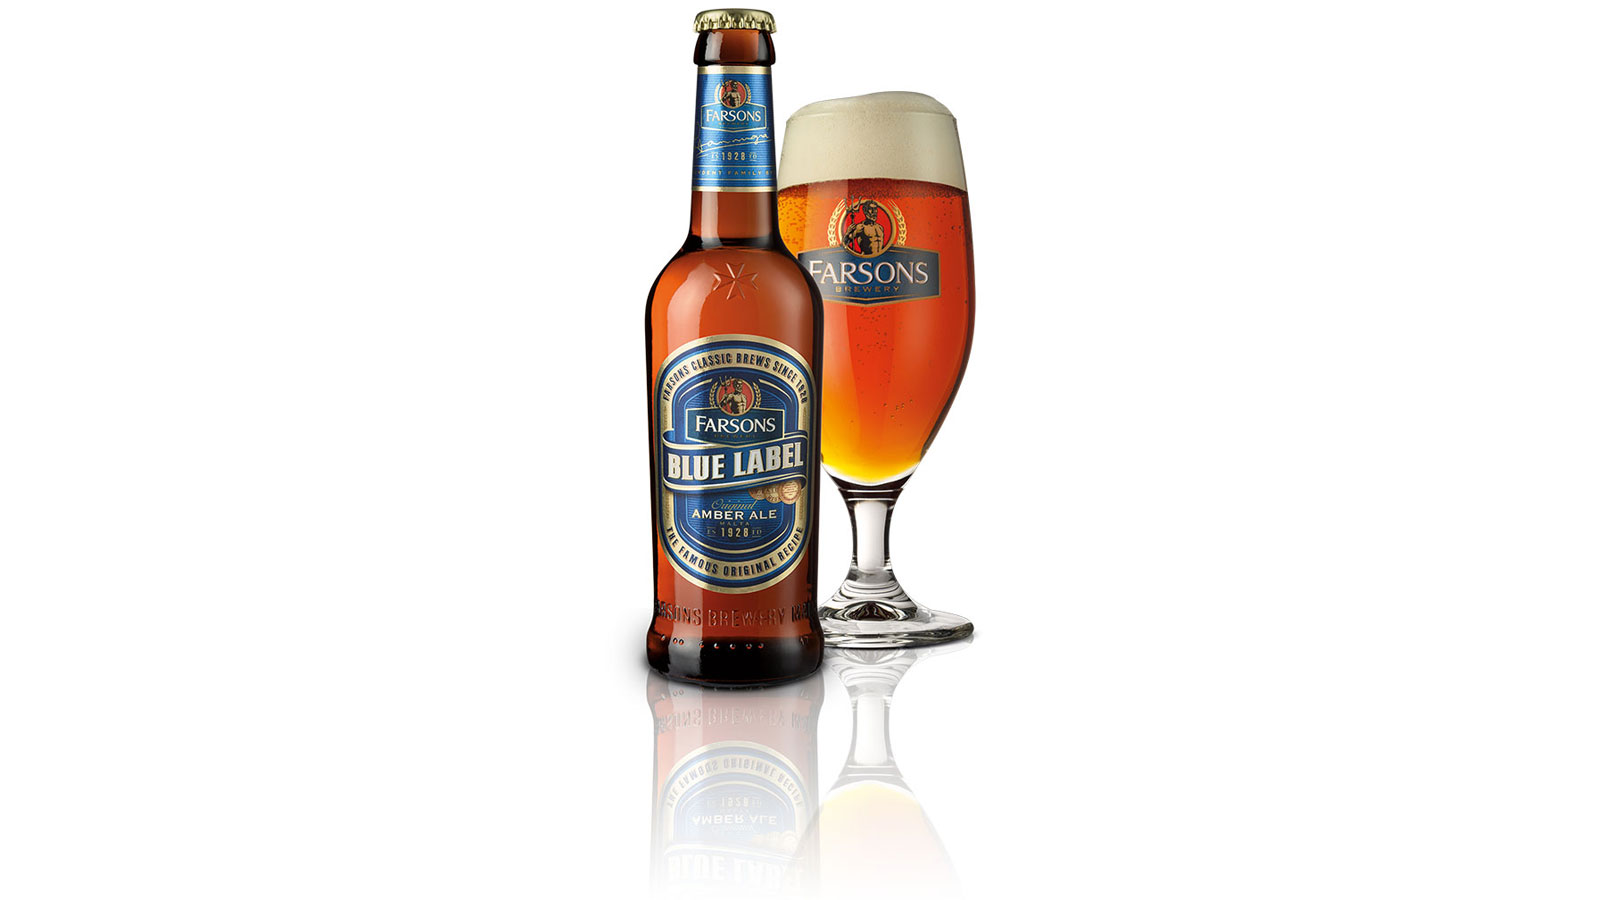 Blue Label wins Gold in Brussels Beer Challenge 2017 